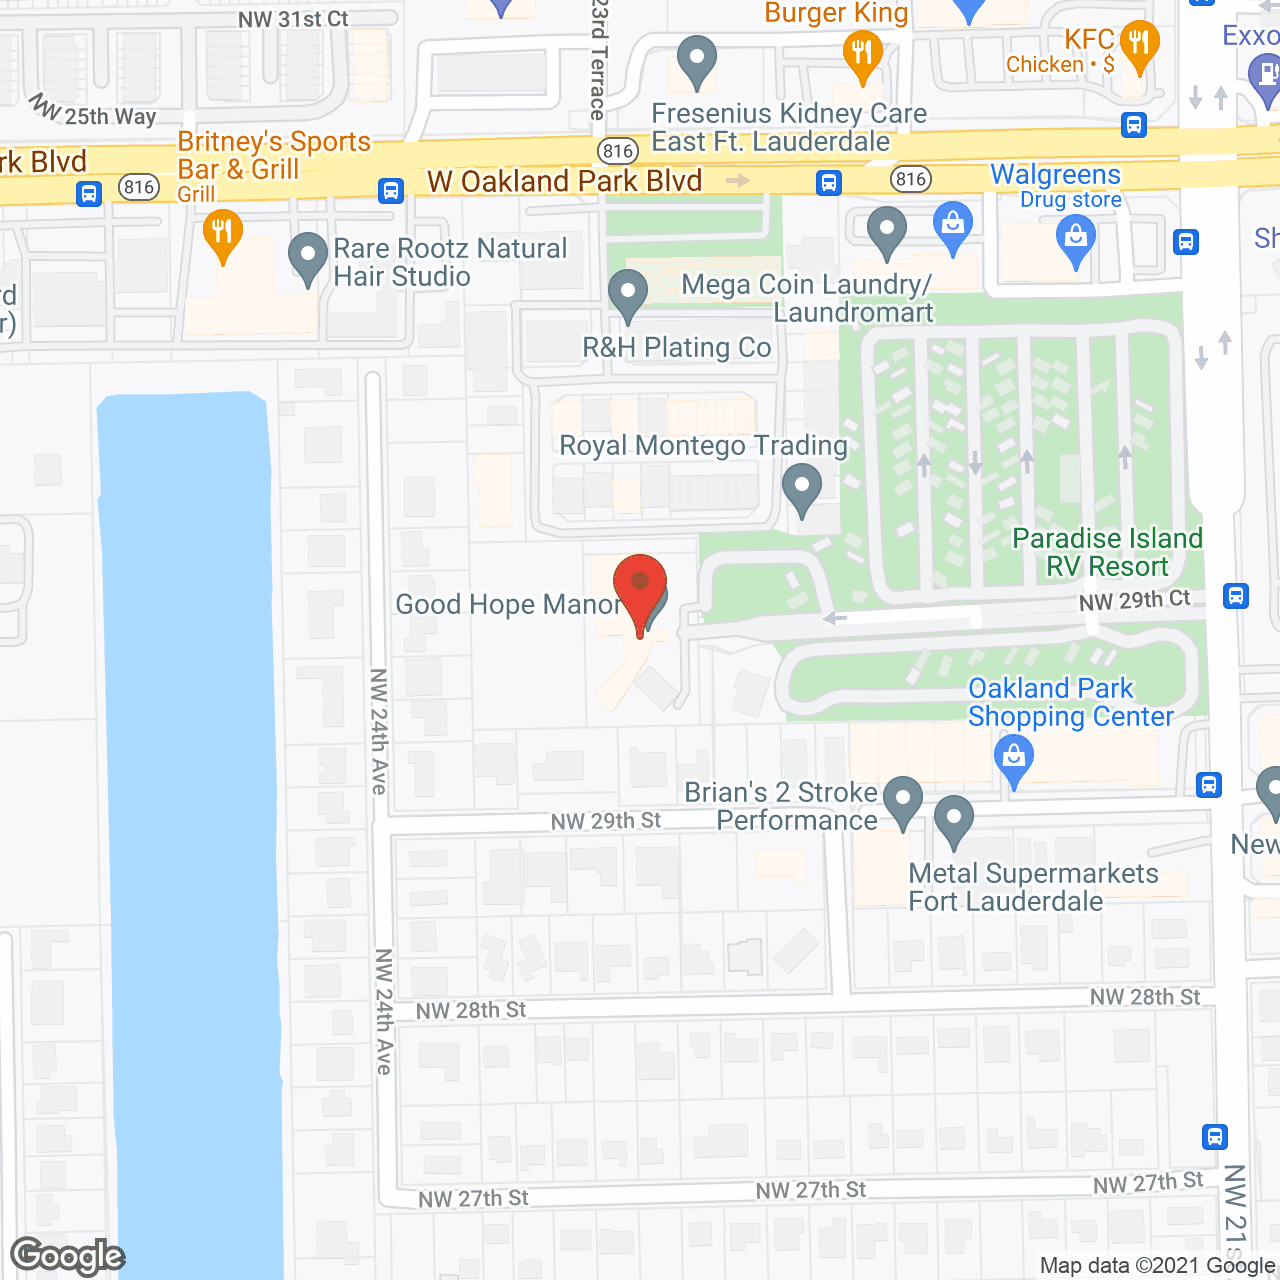 Good Hope Manor in google map